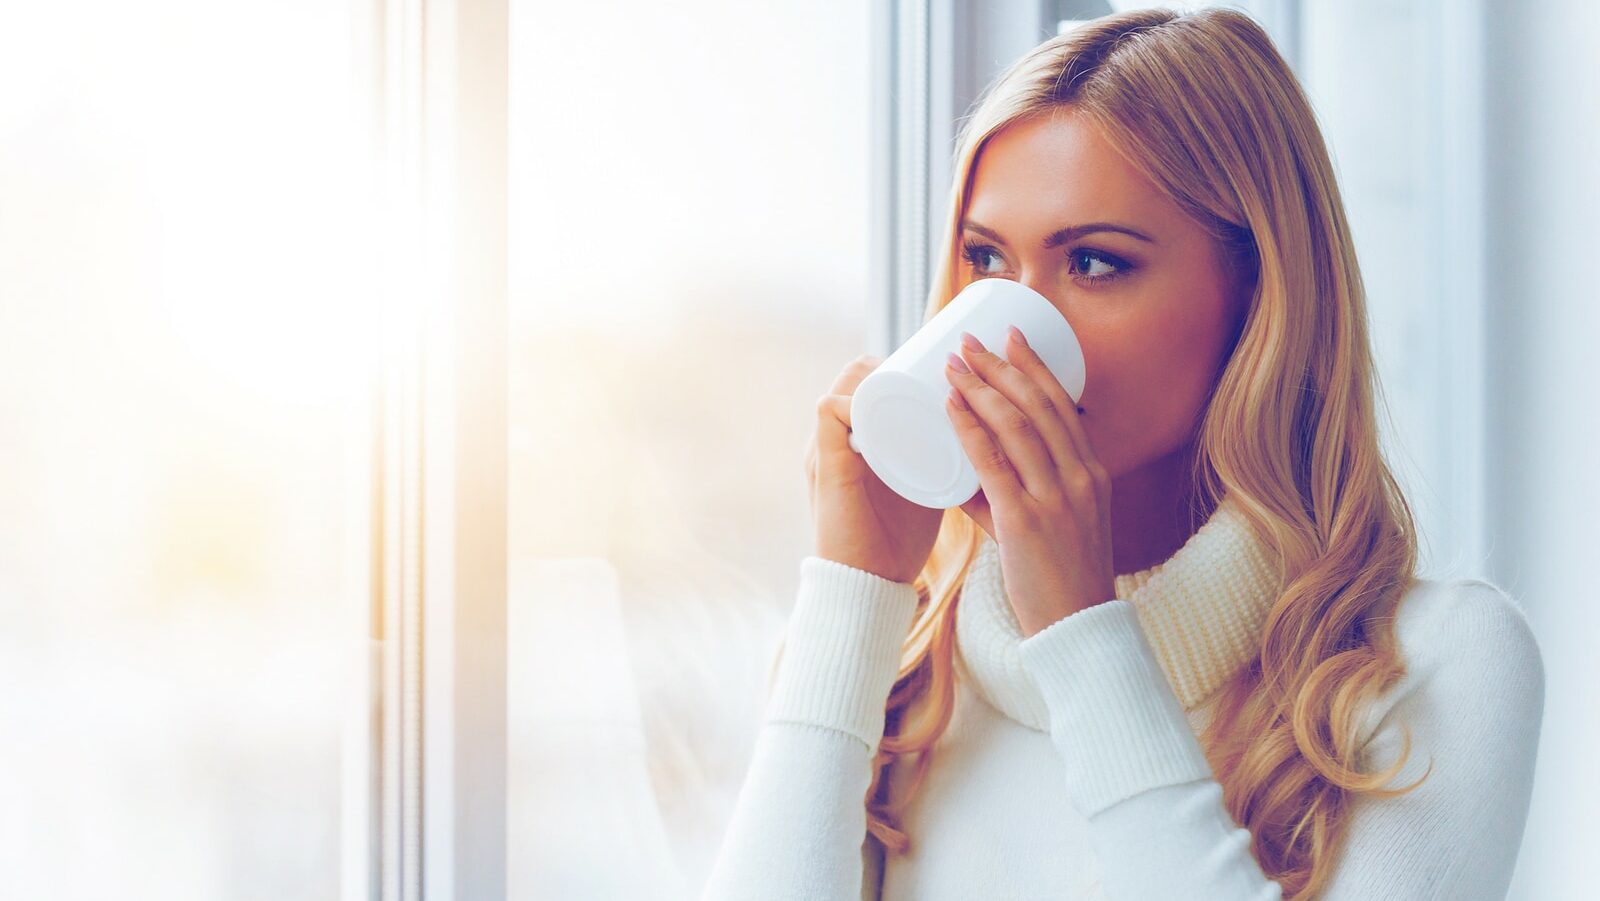 Enjoying fresh coffee. Beautiful young woman in white sweater drinking coffee and looking through a window